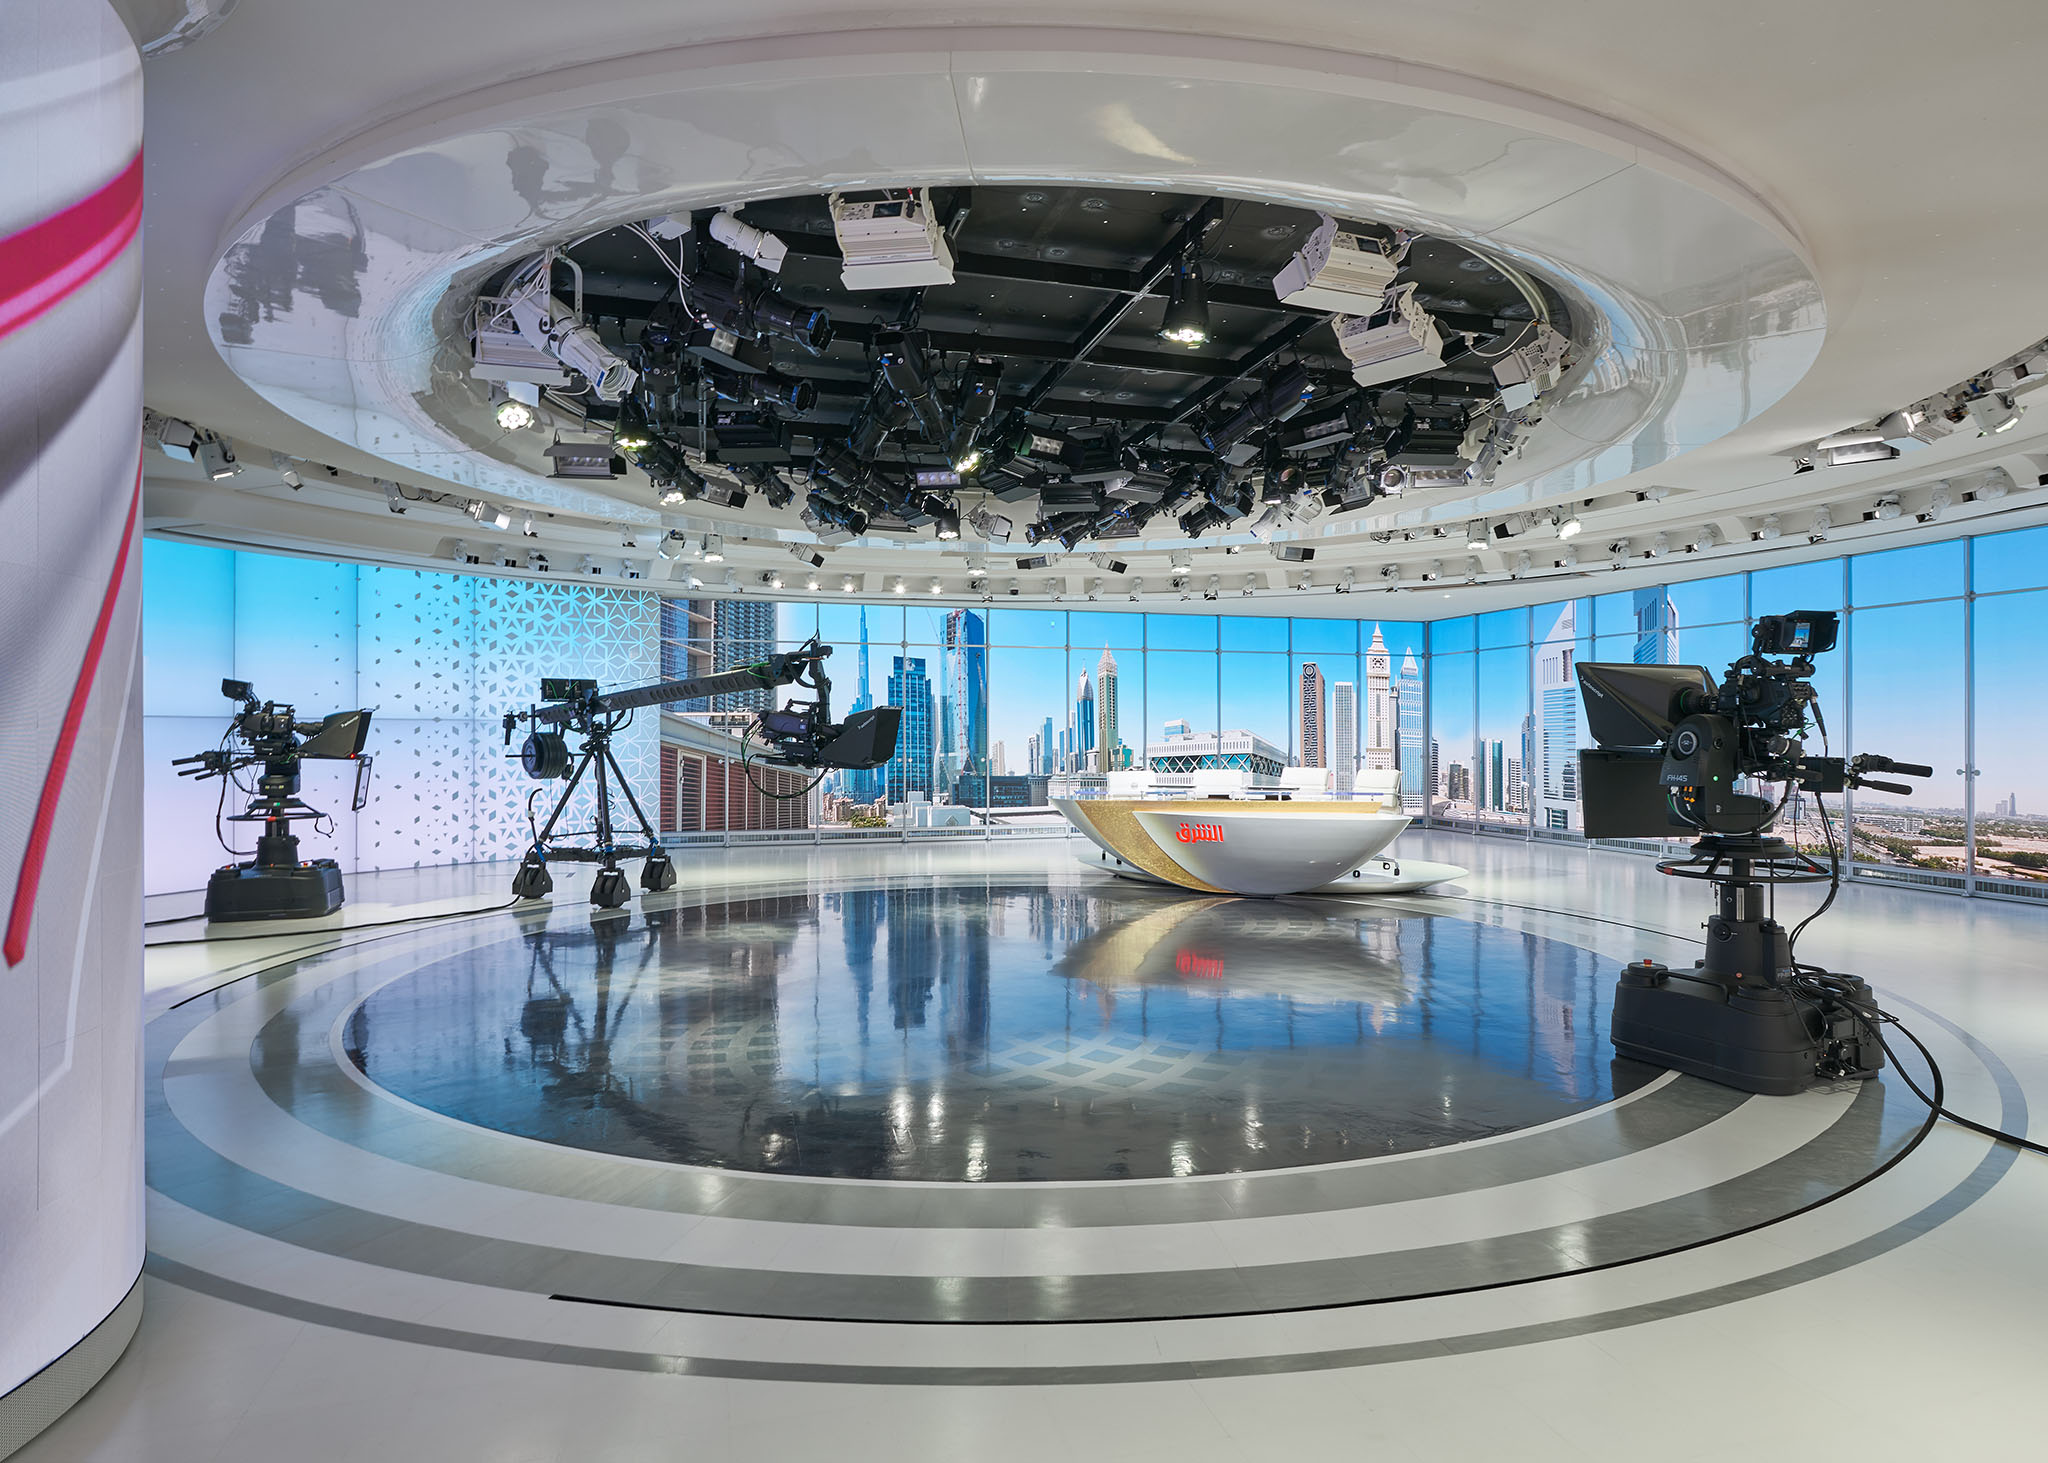 News studio at Asharq News in Dubai